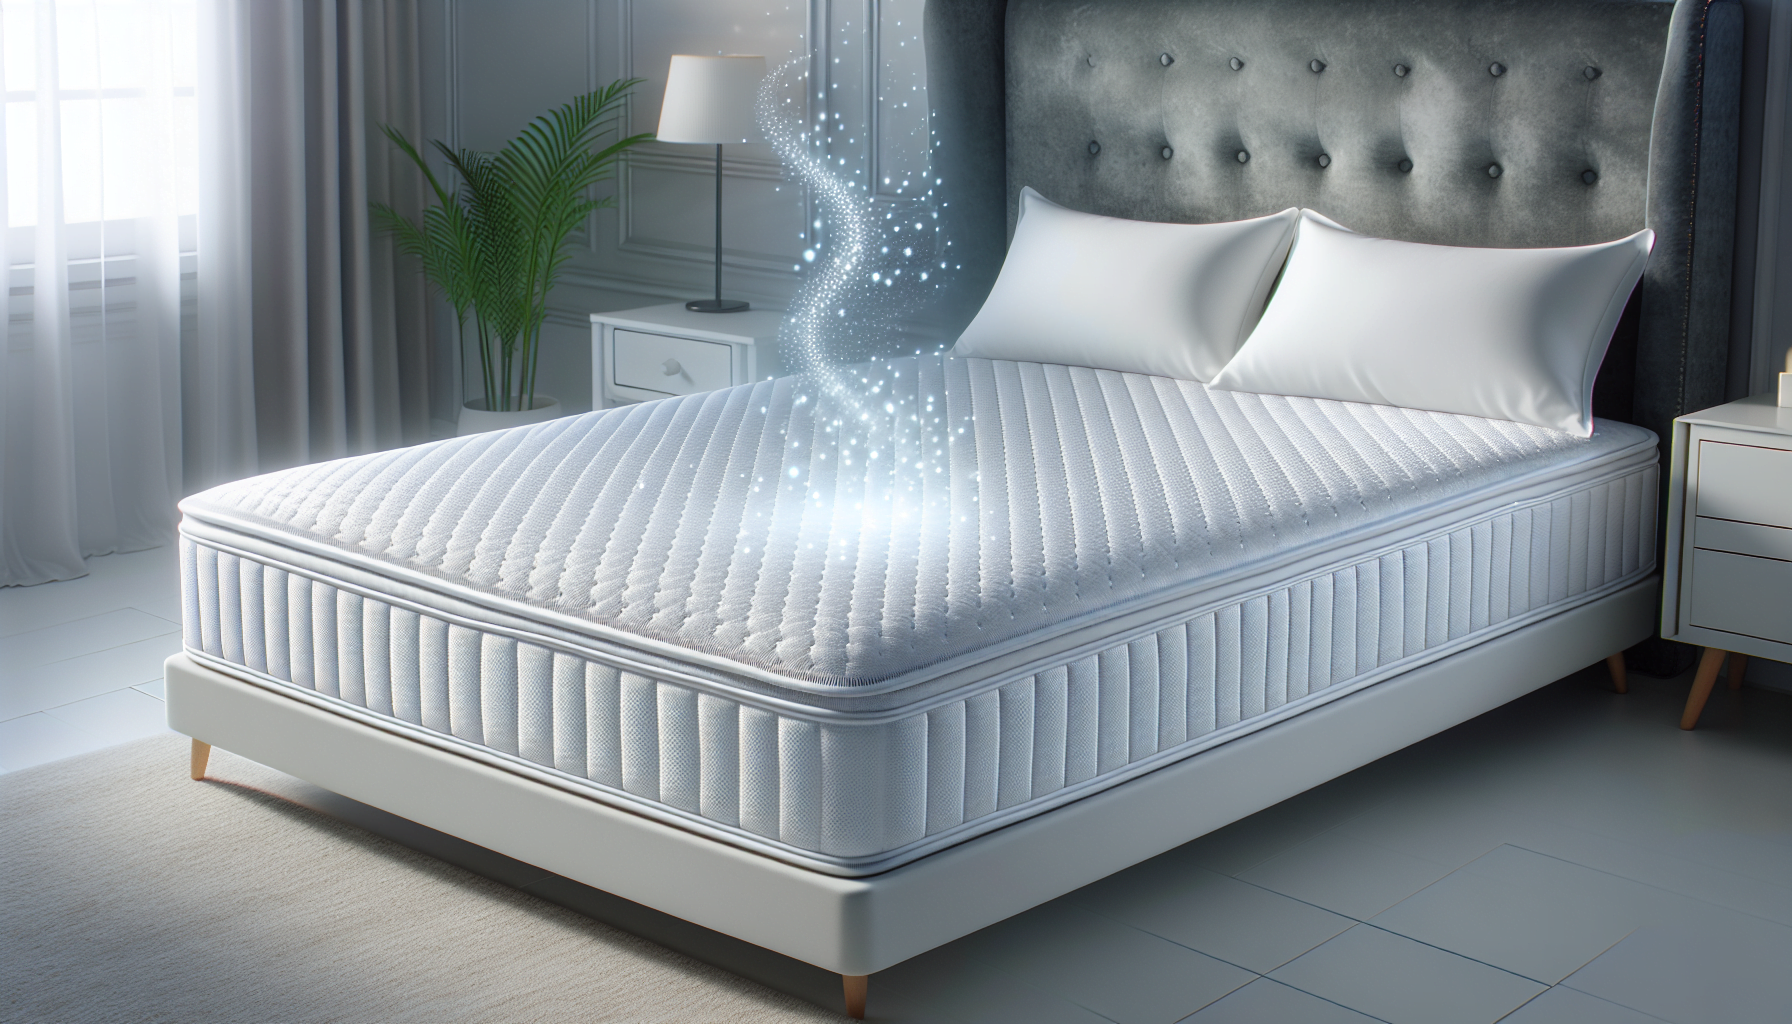 A comfortable mattress protector for quality sleep